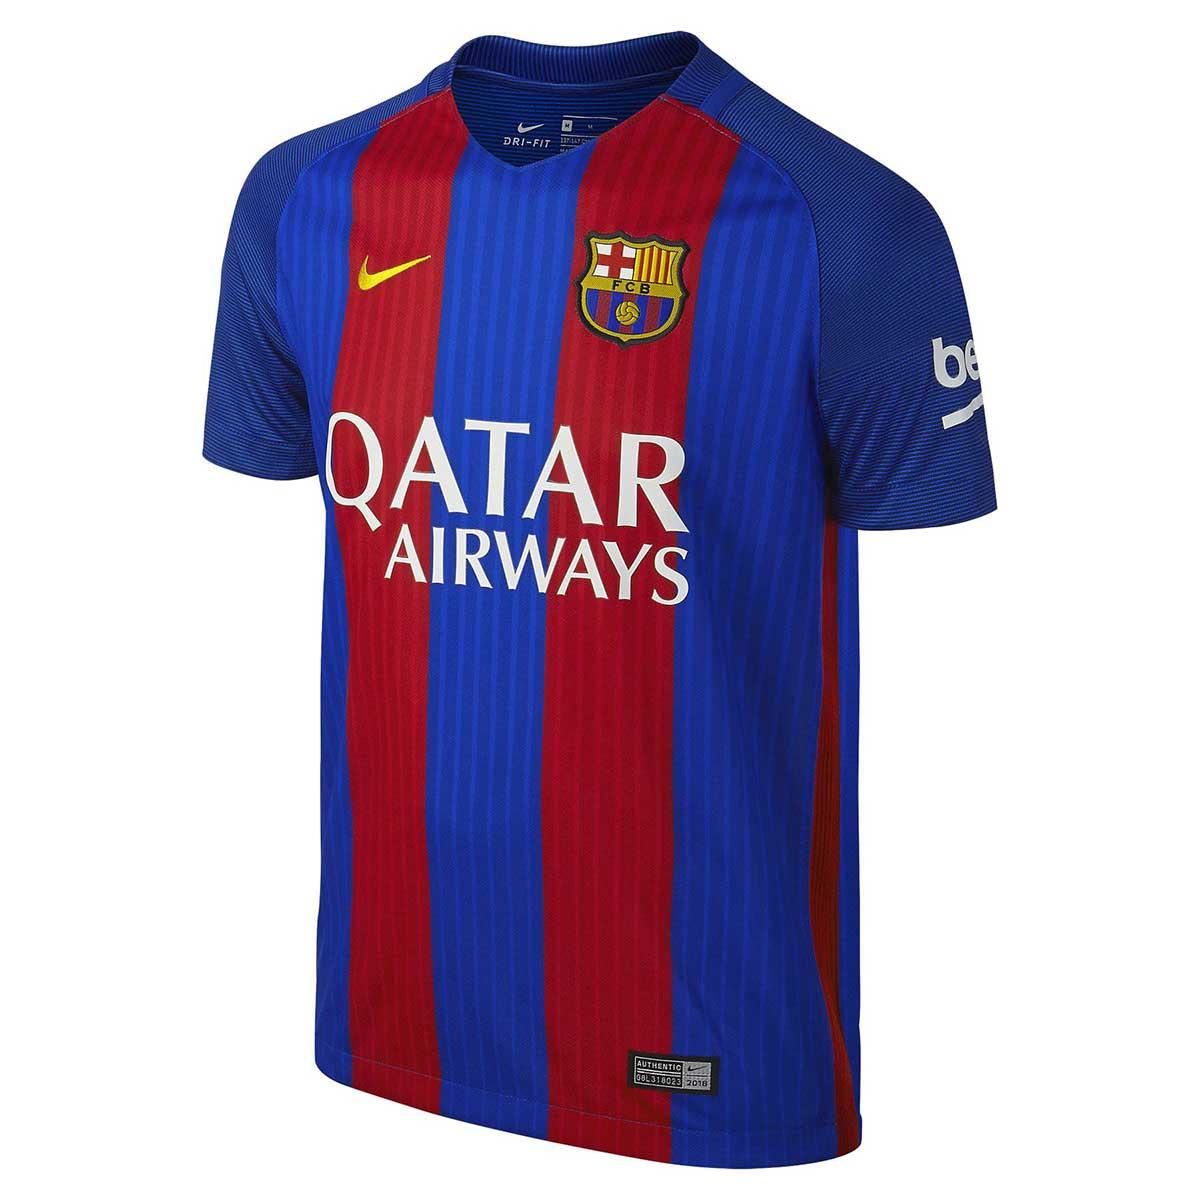 Barca Jersey 2016 : Nike Barcelona Home Jersey - 2017 FC Barcelona Jerseys / Barcelona home 